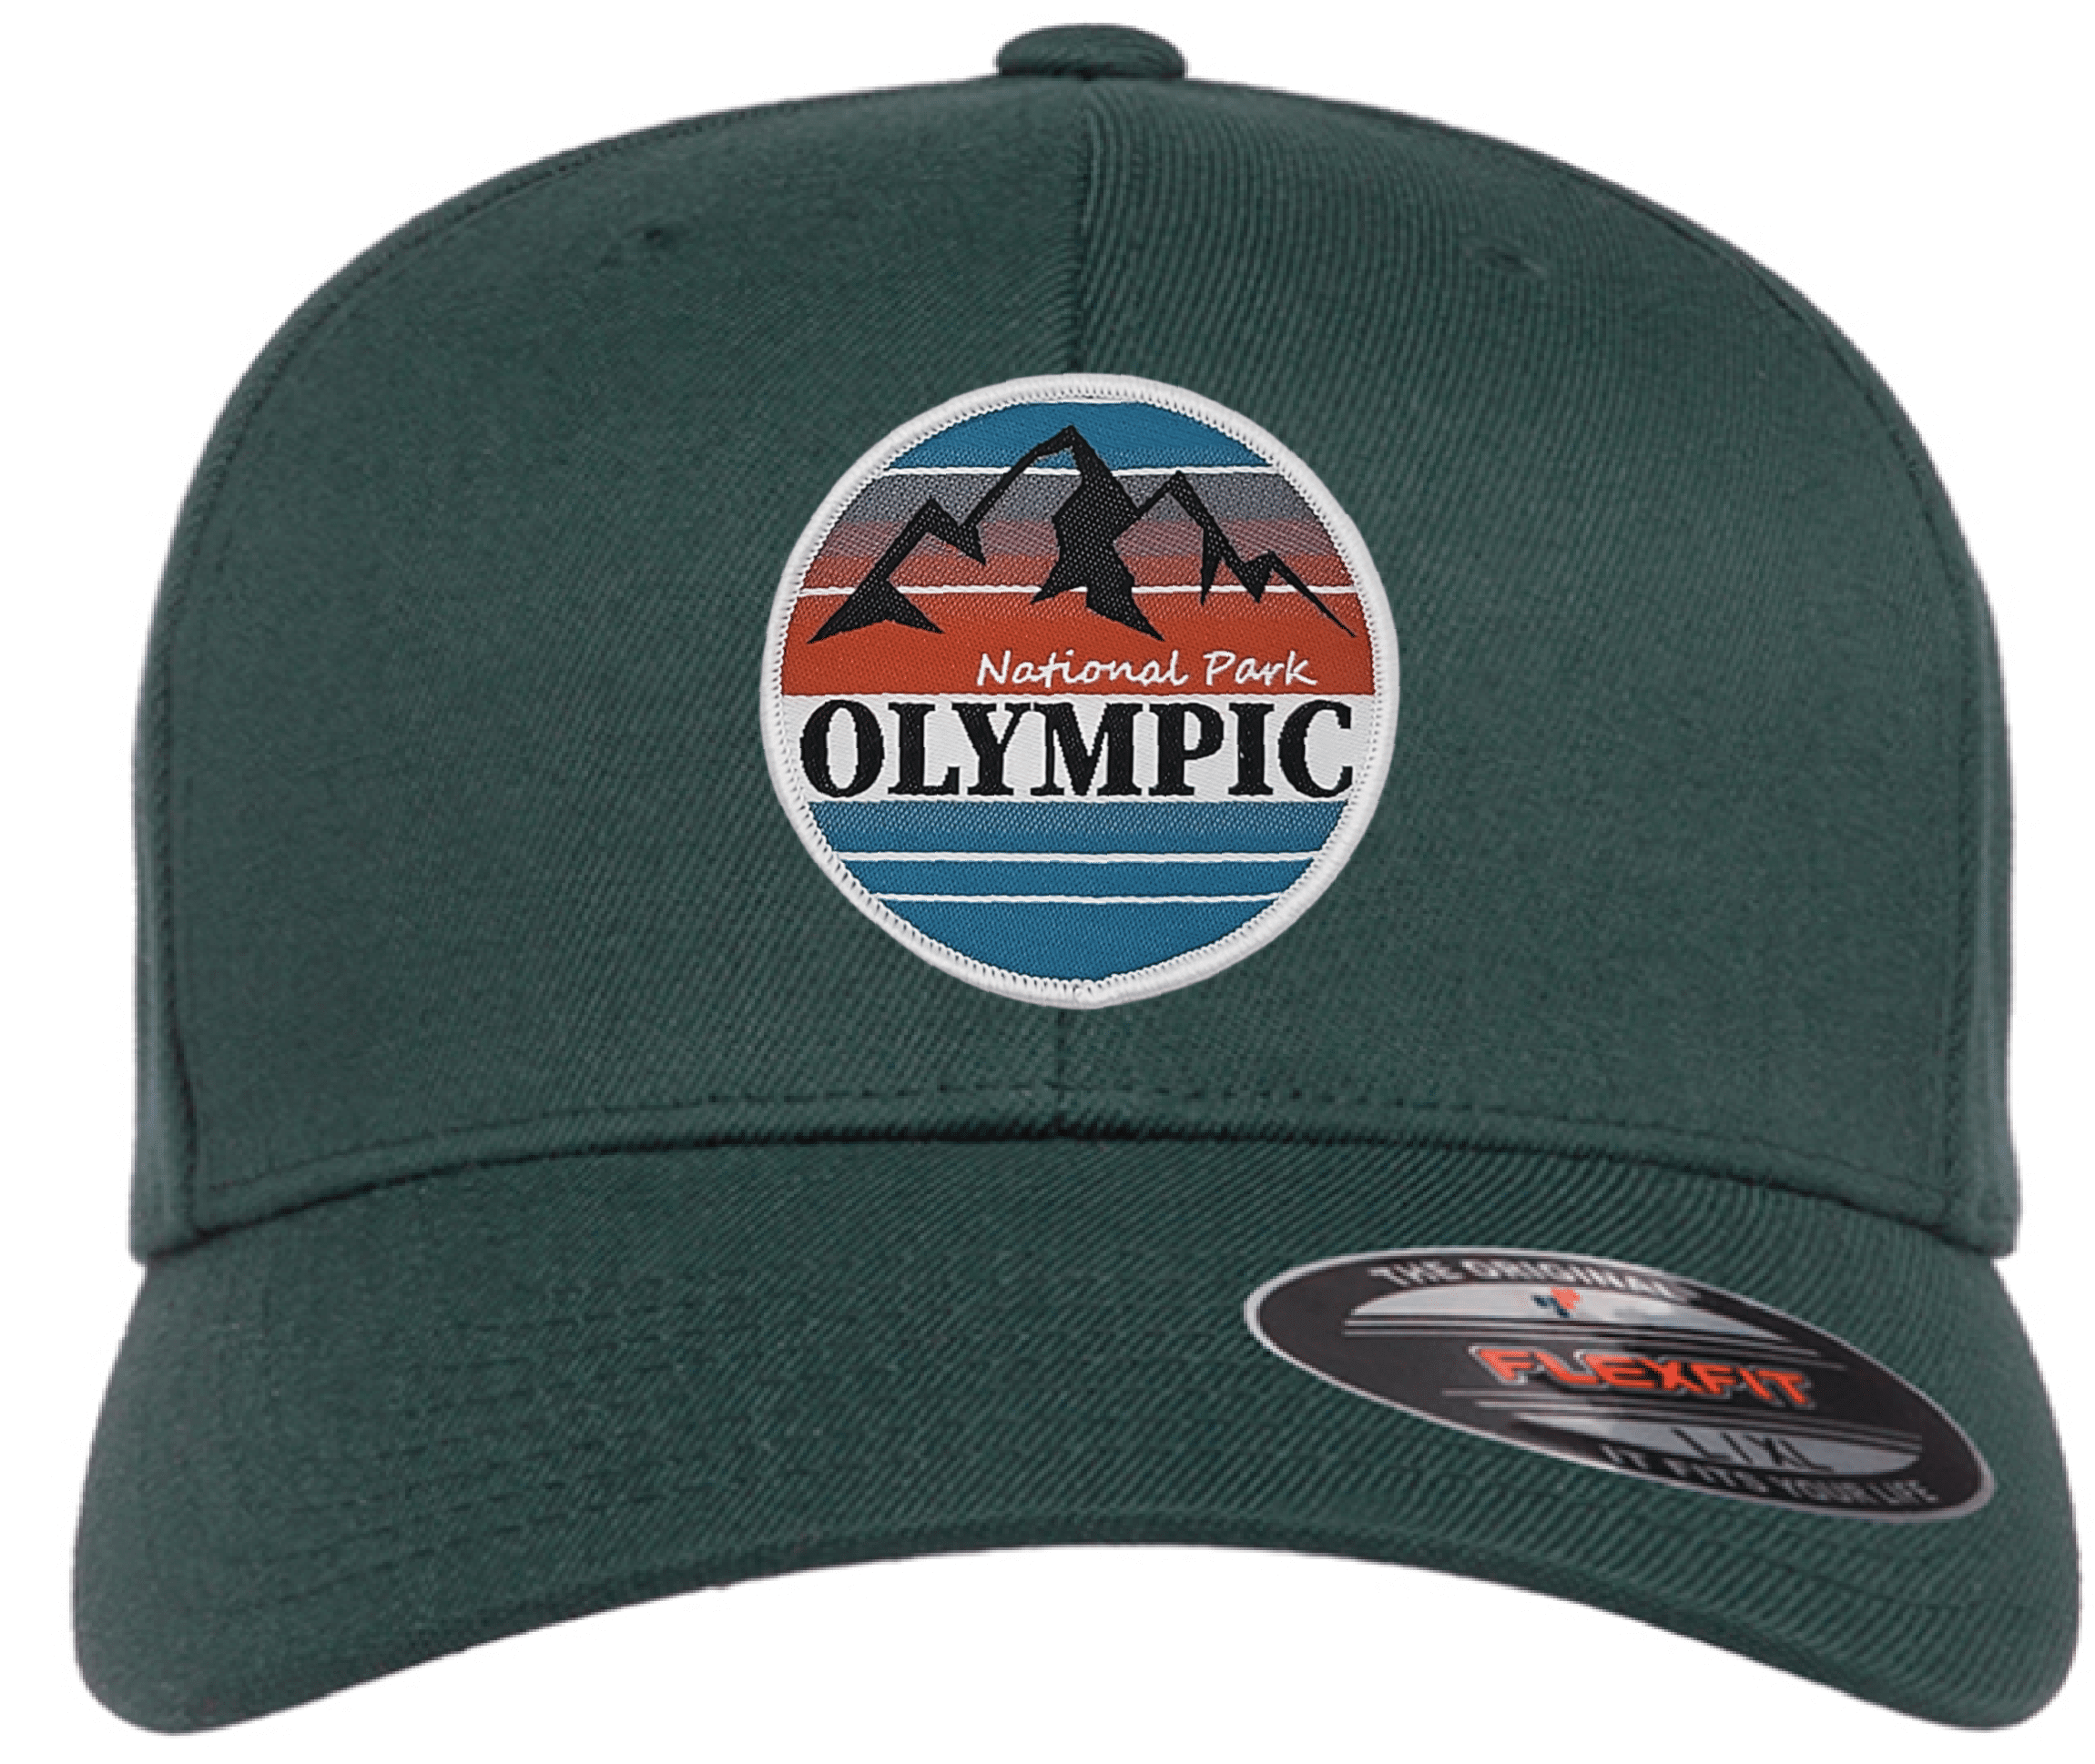 Apparel Park PNW National - Flexfit Olympic Hat